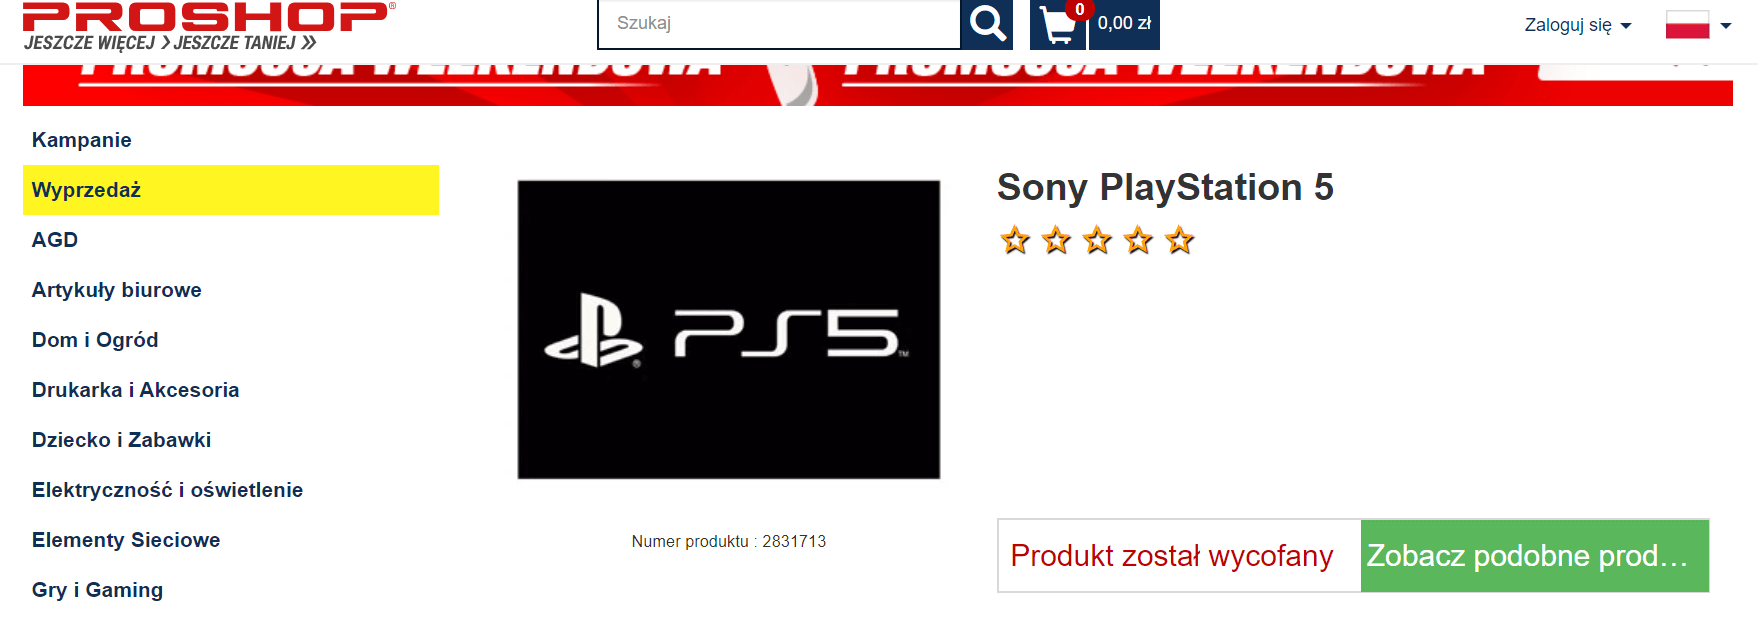 Sony Playstation, pro shop, 